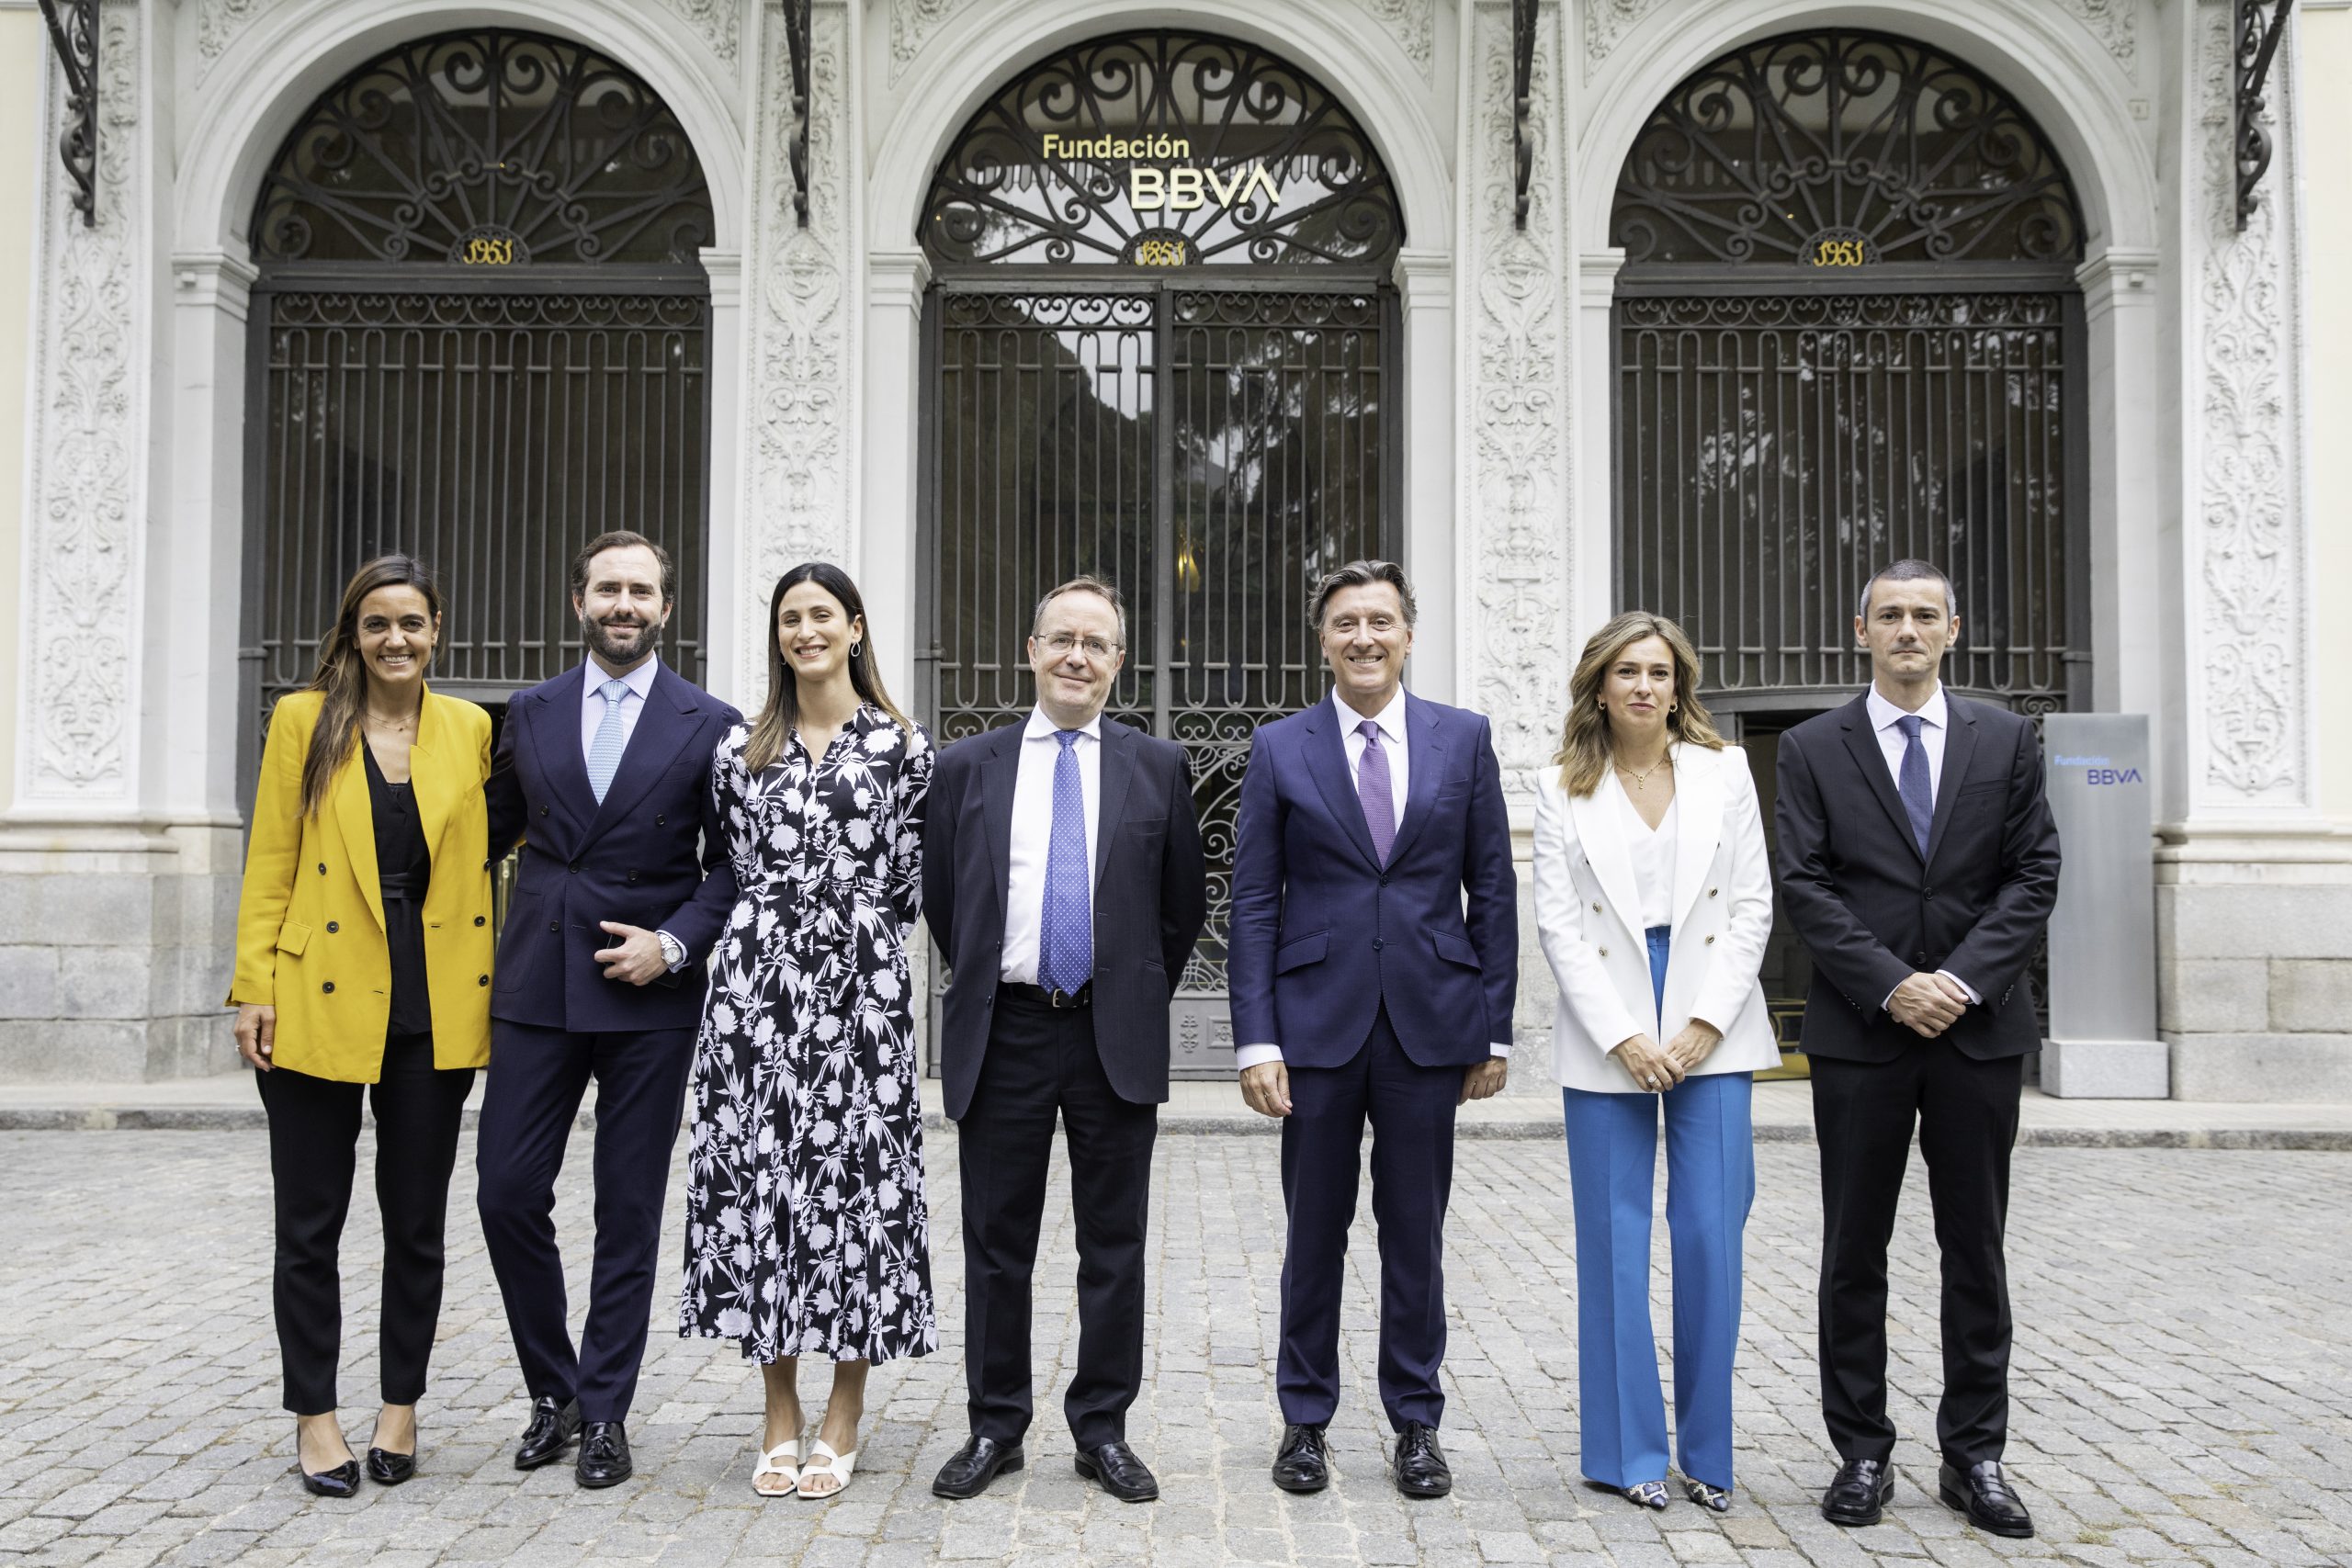 BBVA Switzerland invites to visit the Palacio del Marqués de Salamanca